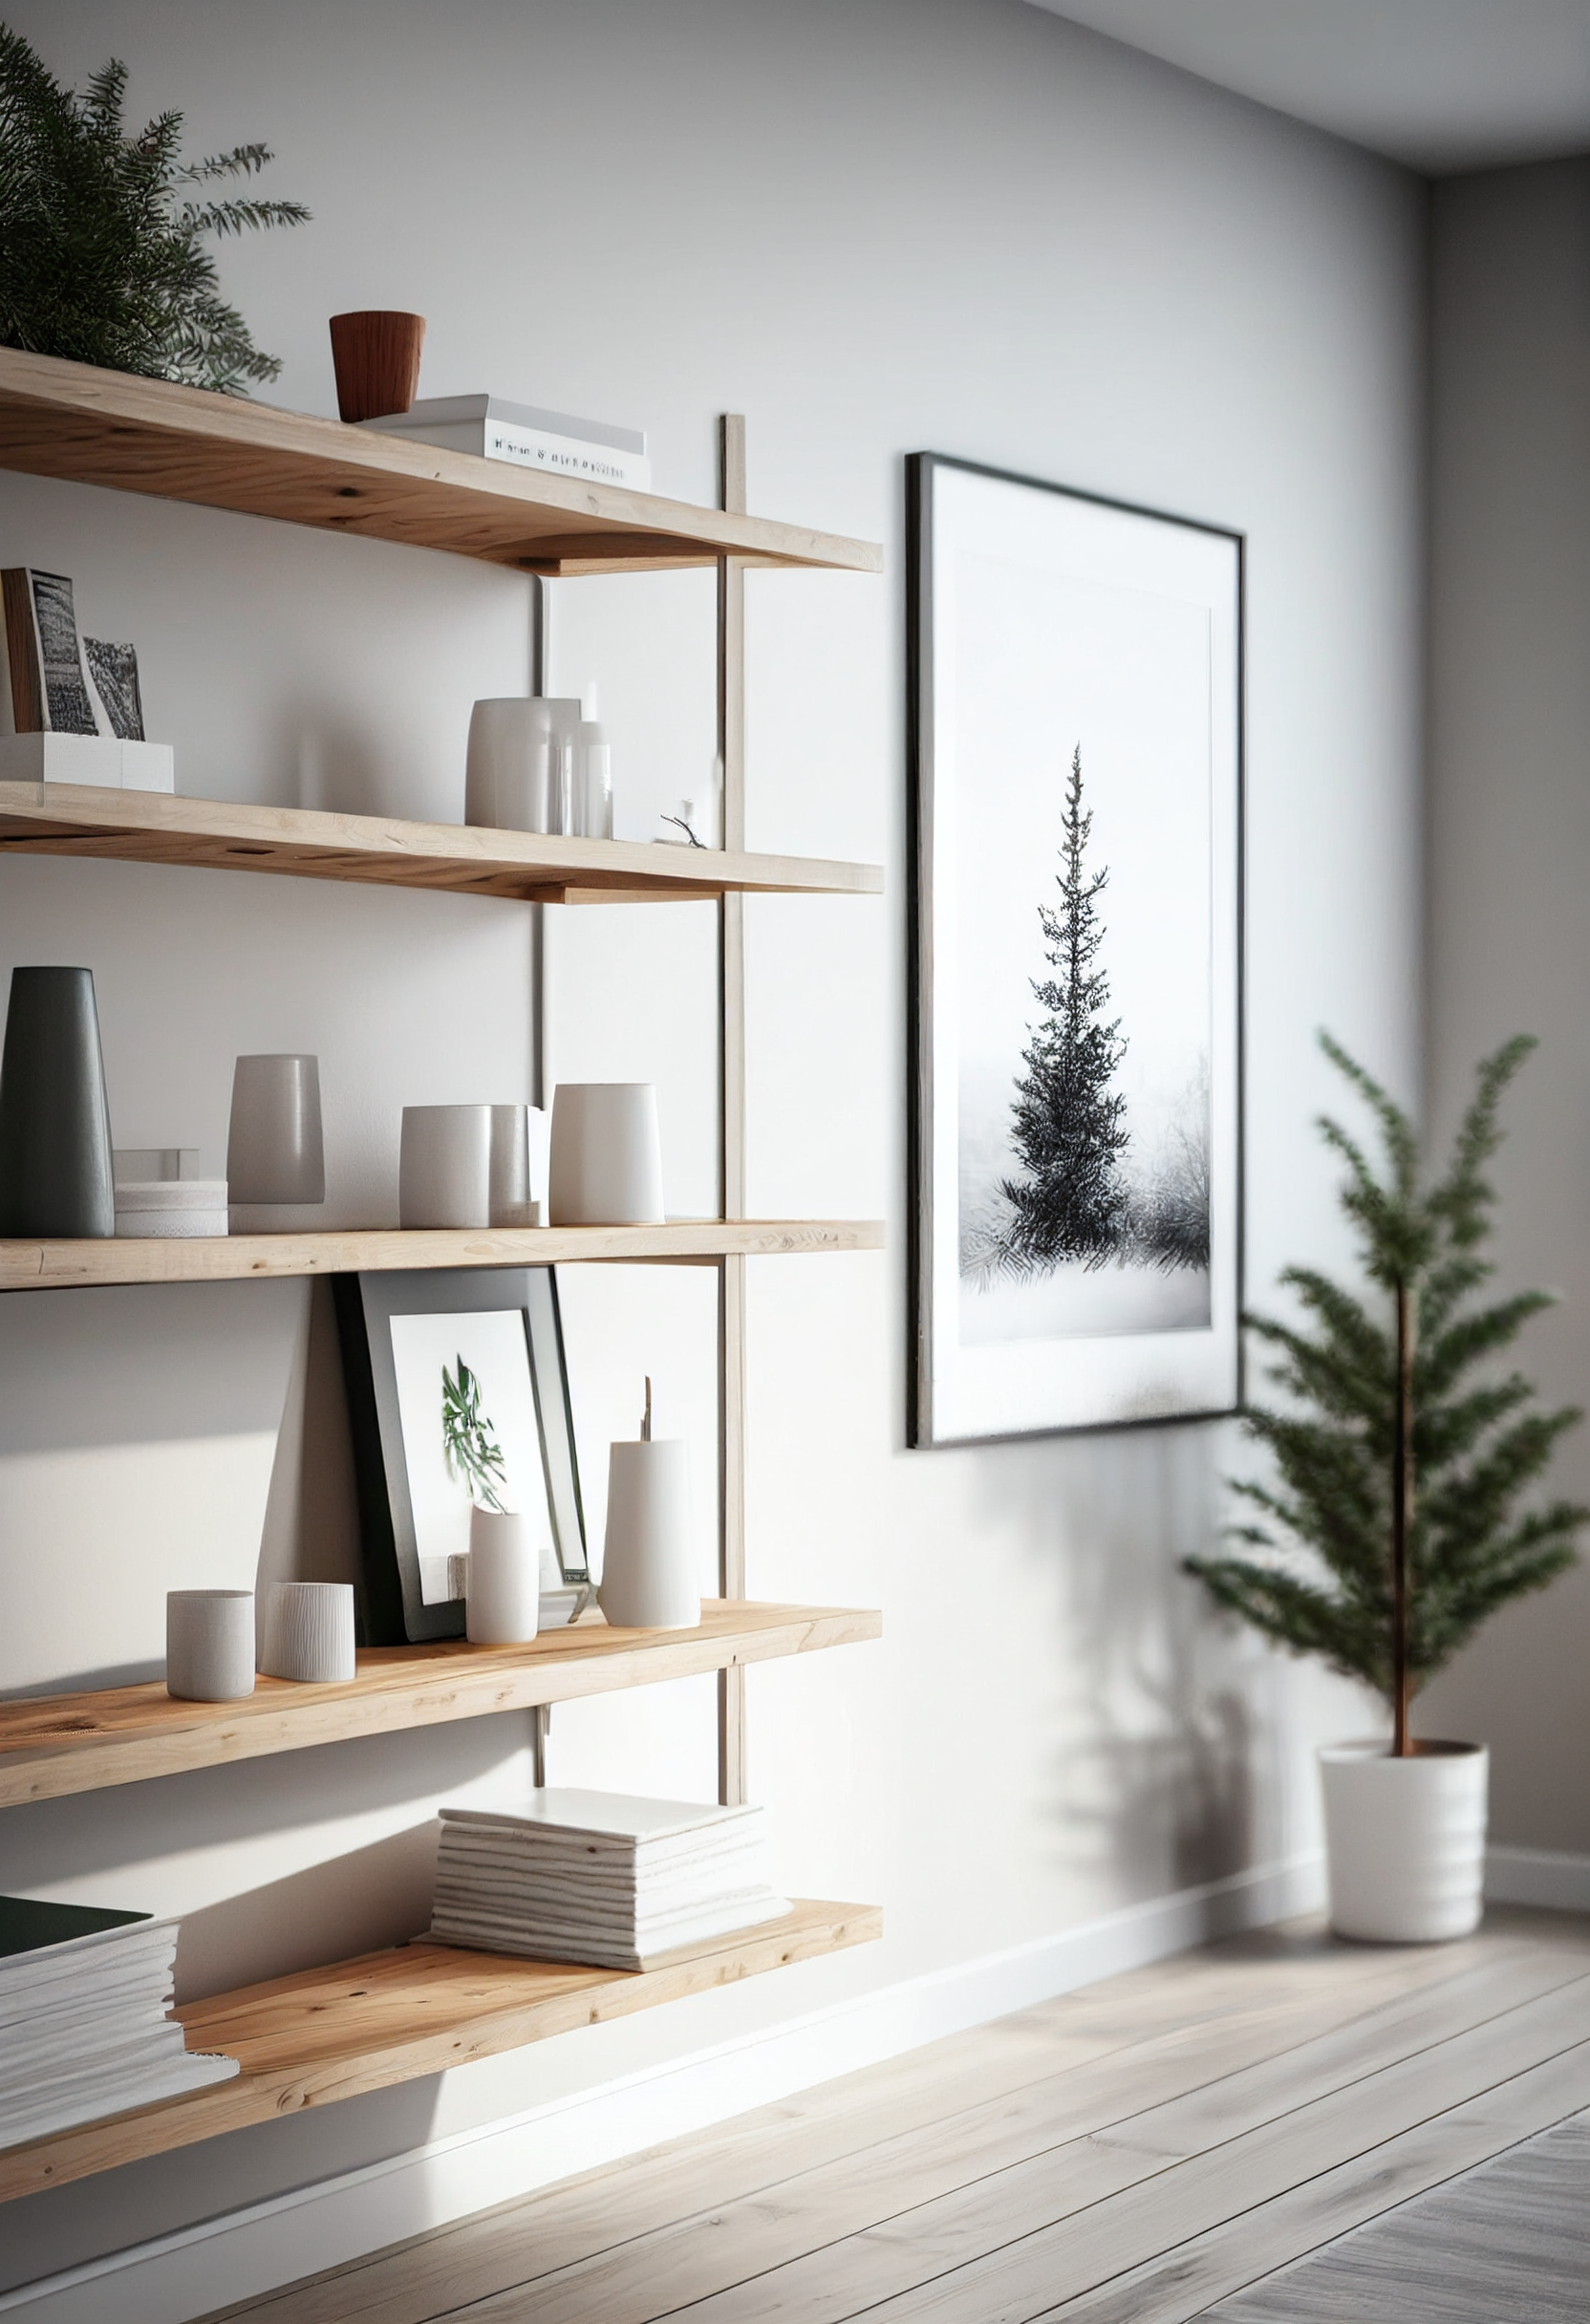 Slim pine shelves